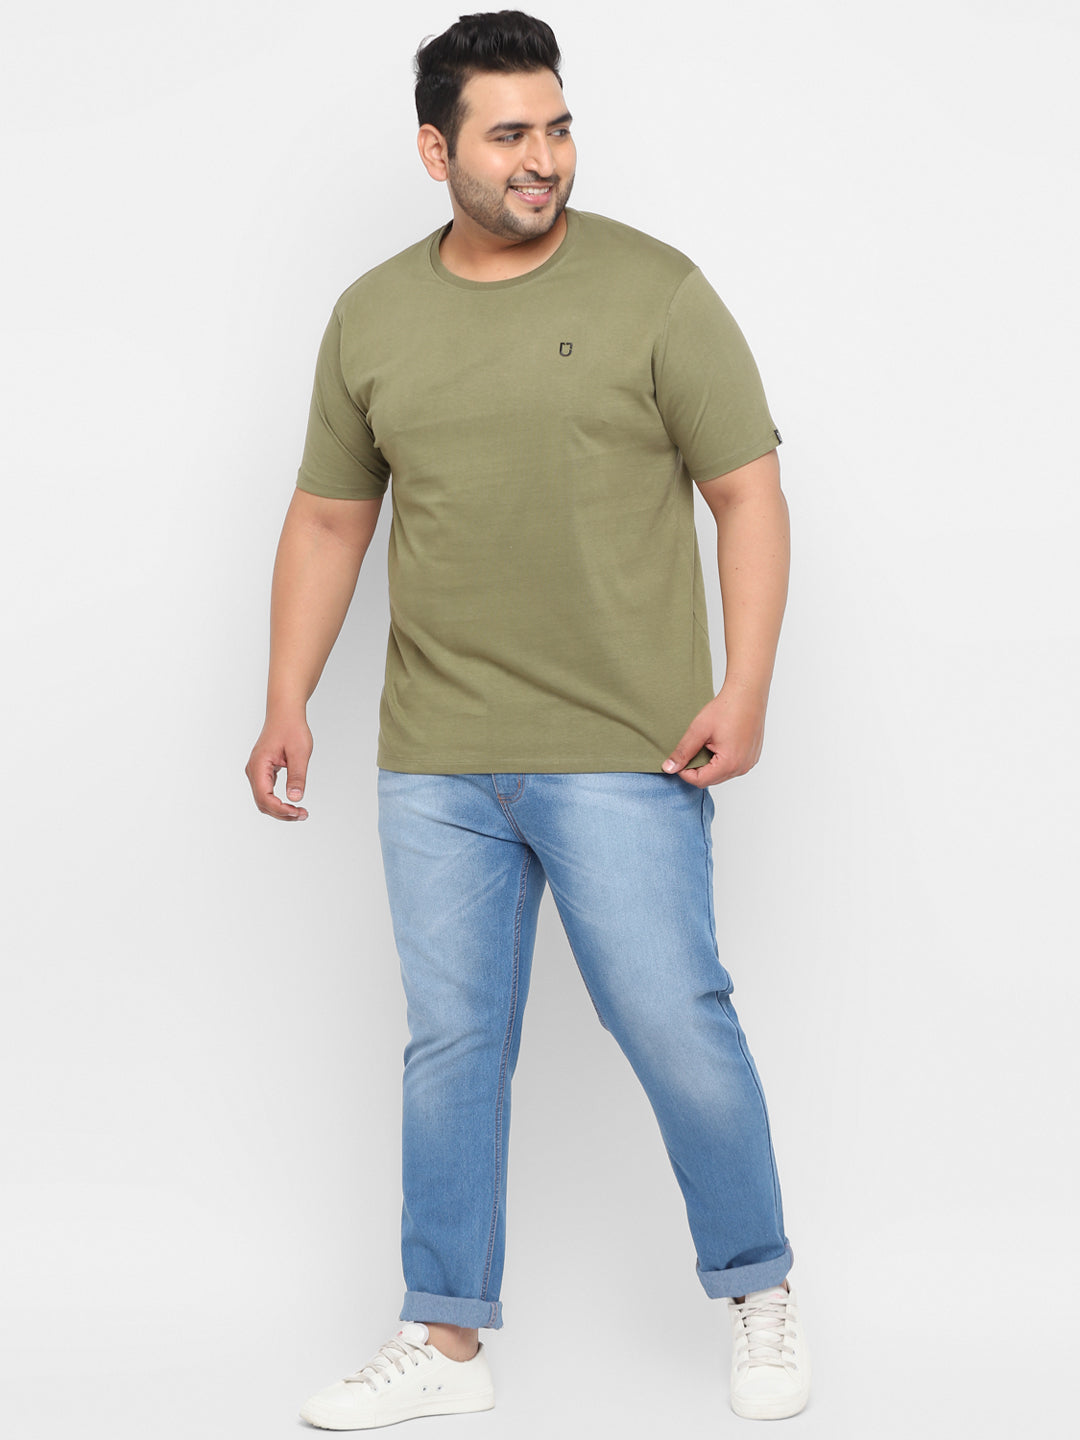 Plus Men's Olive Green Solid Regular Fit Round Neck Cotton T-Shirt